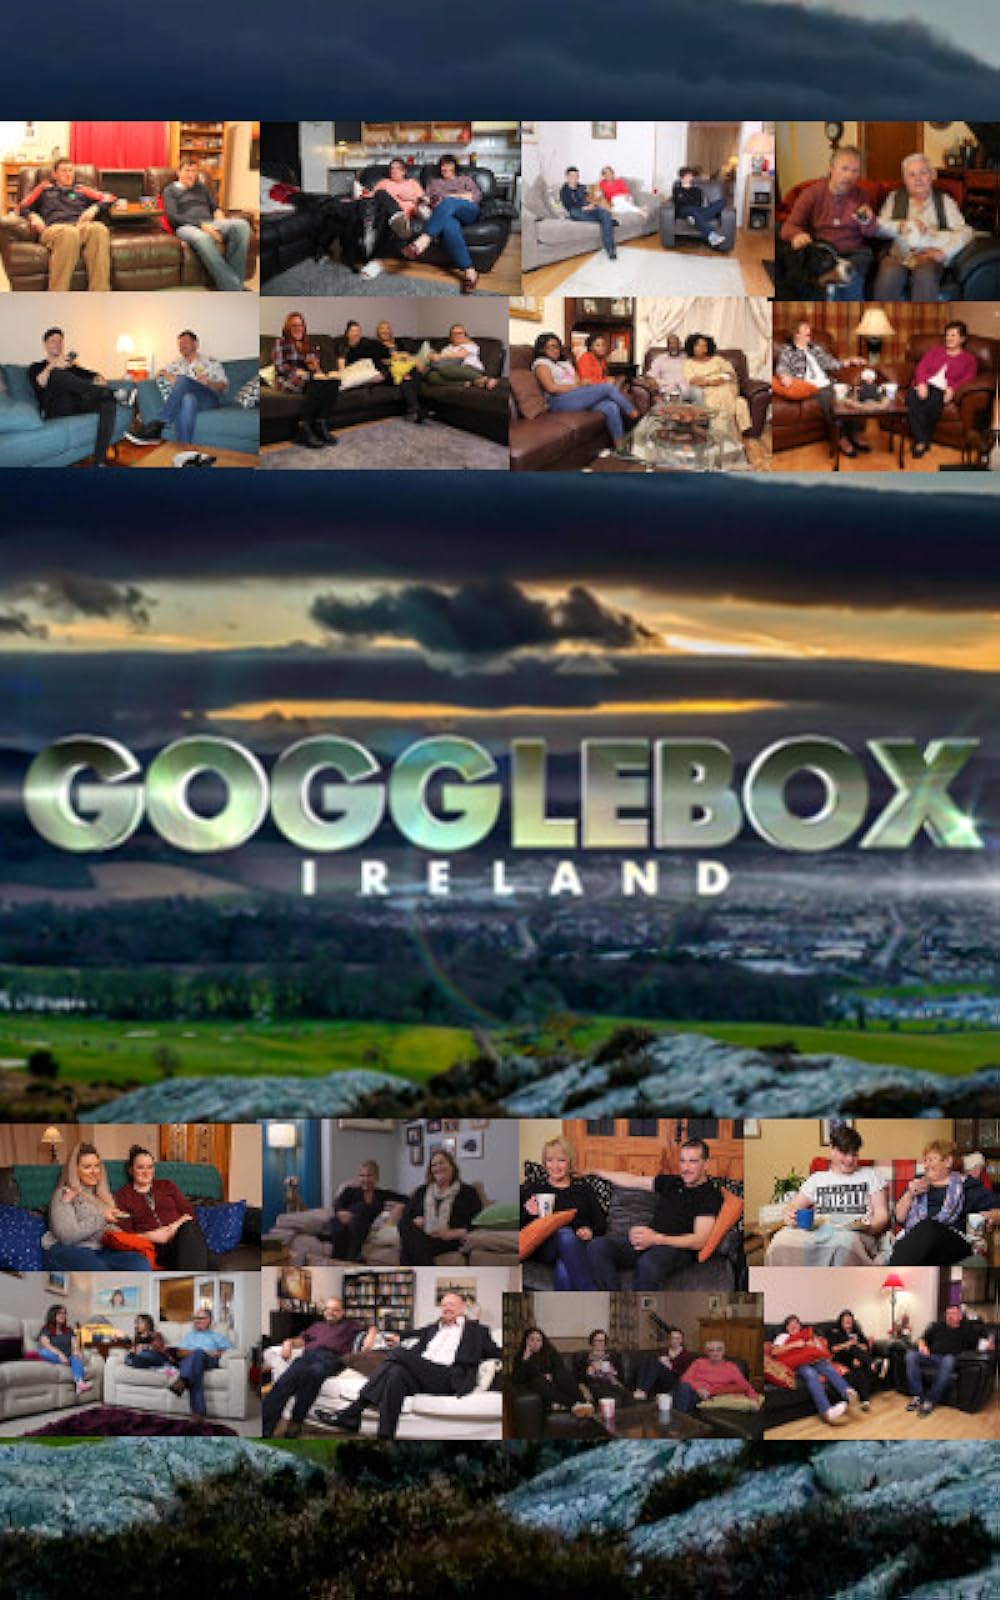 Gogglebox Ireland